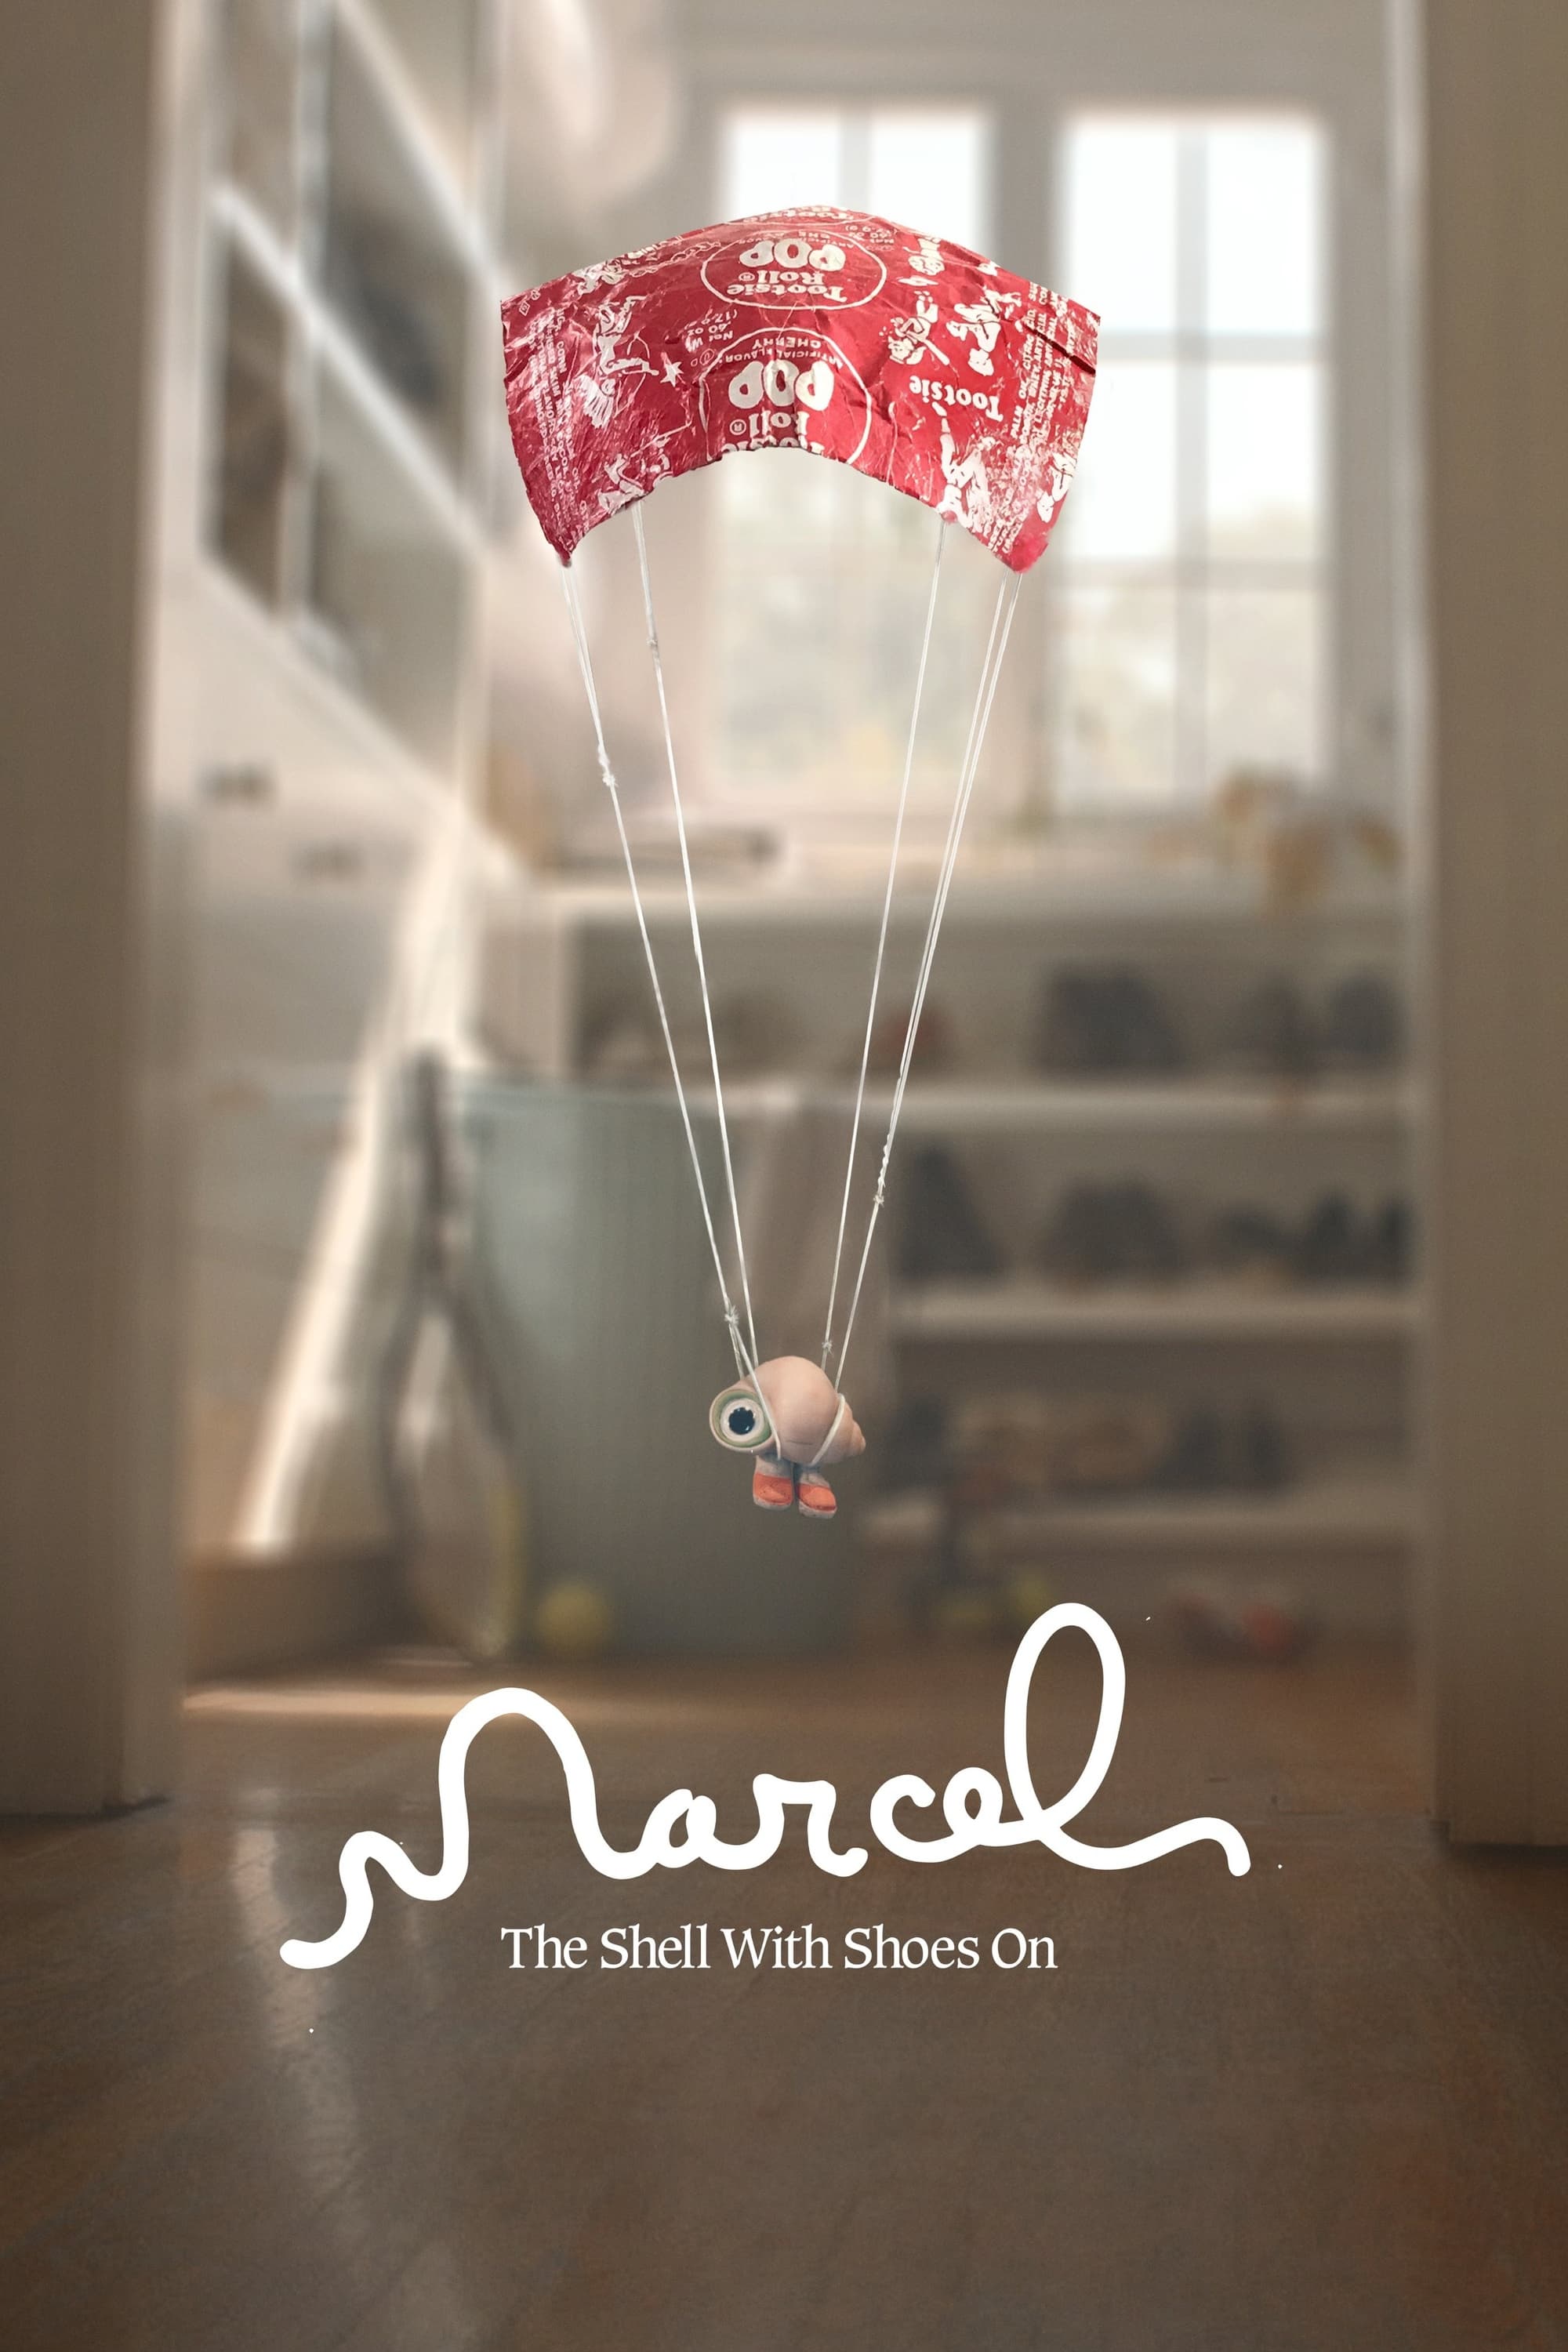 Marcel, a Concha de Sapatos